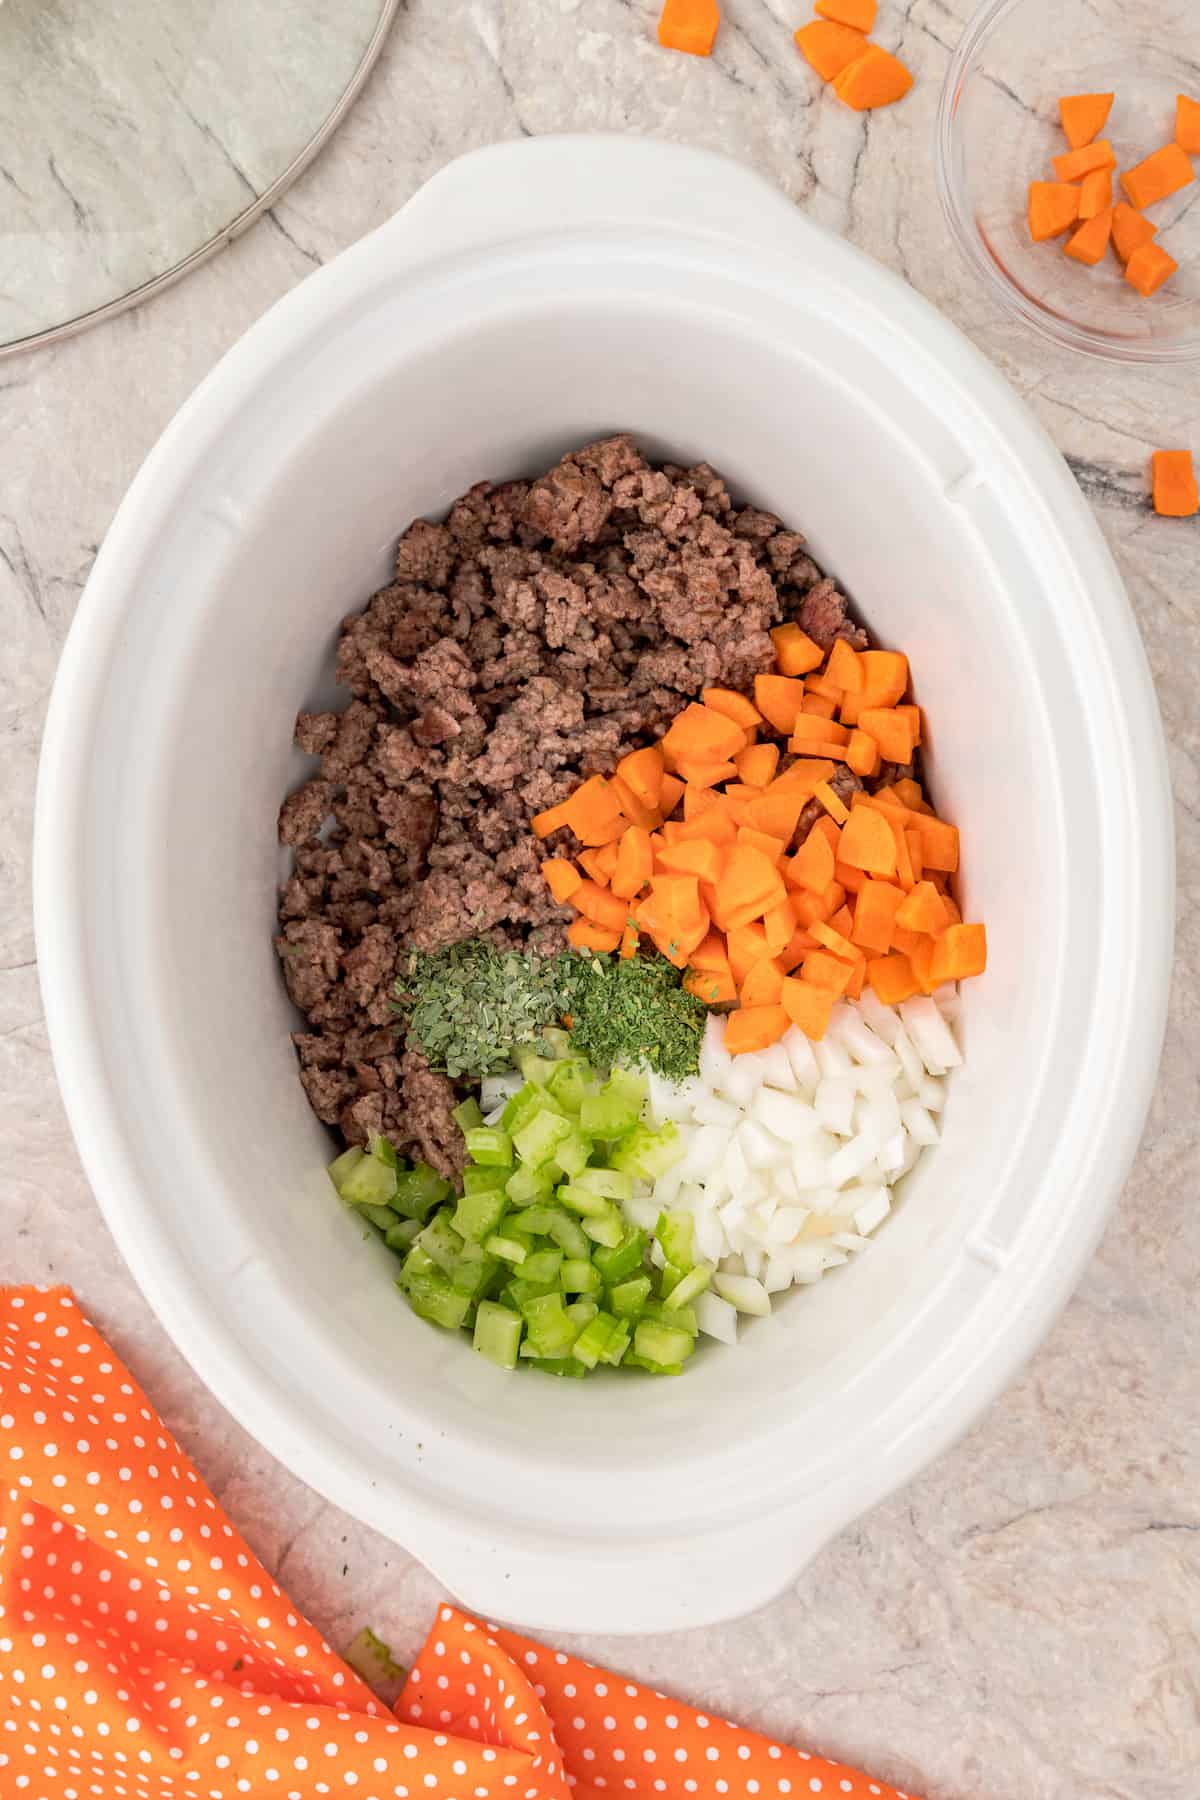 add veggies and ground beef to the crockpot